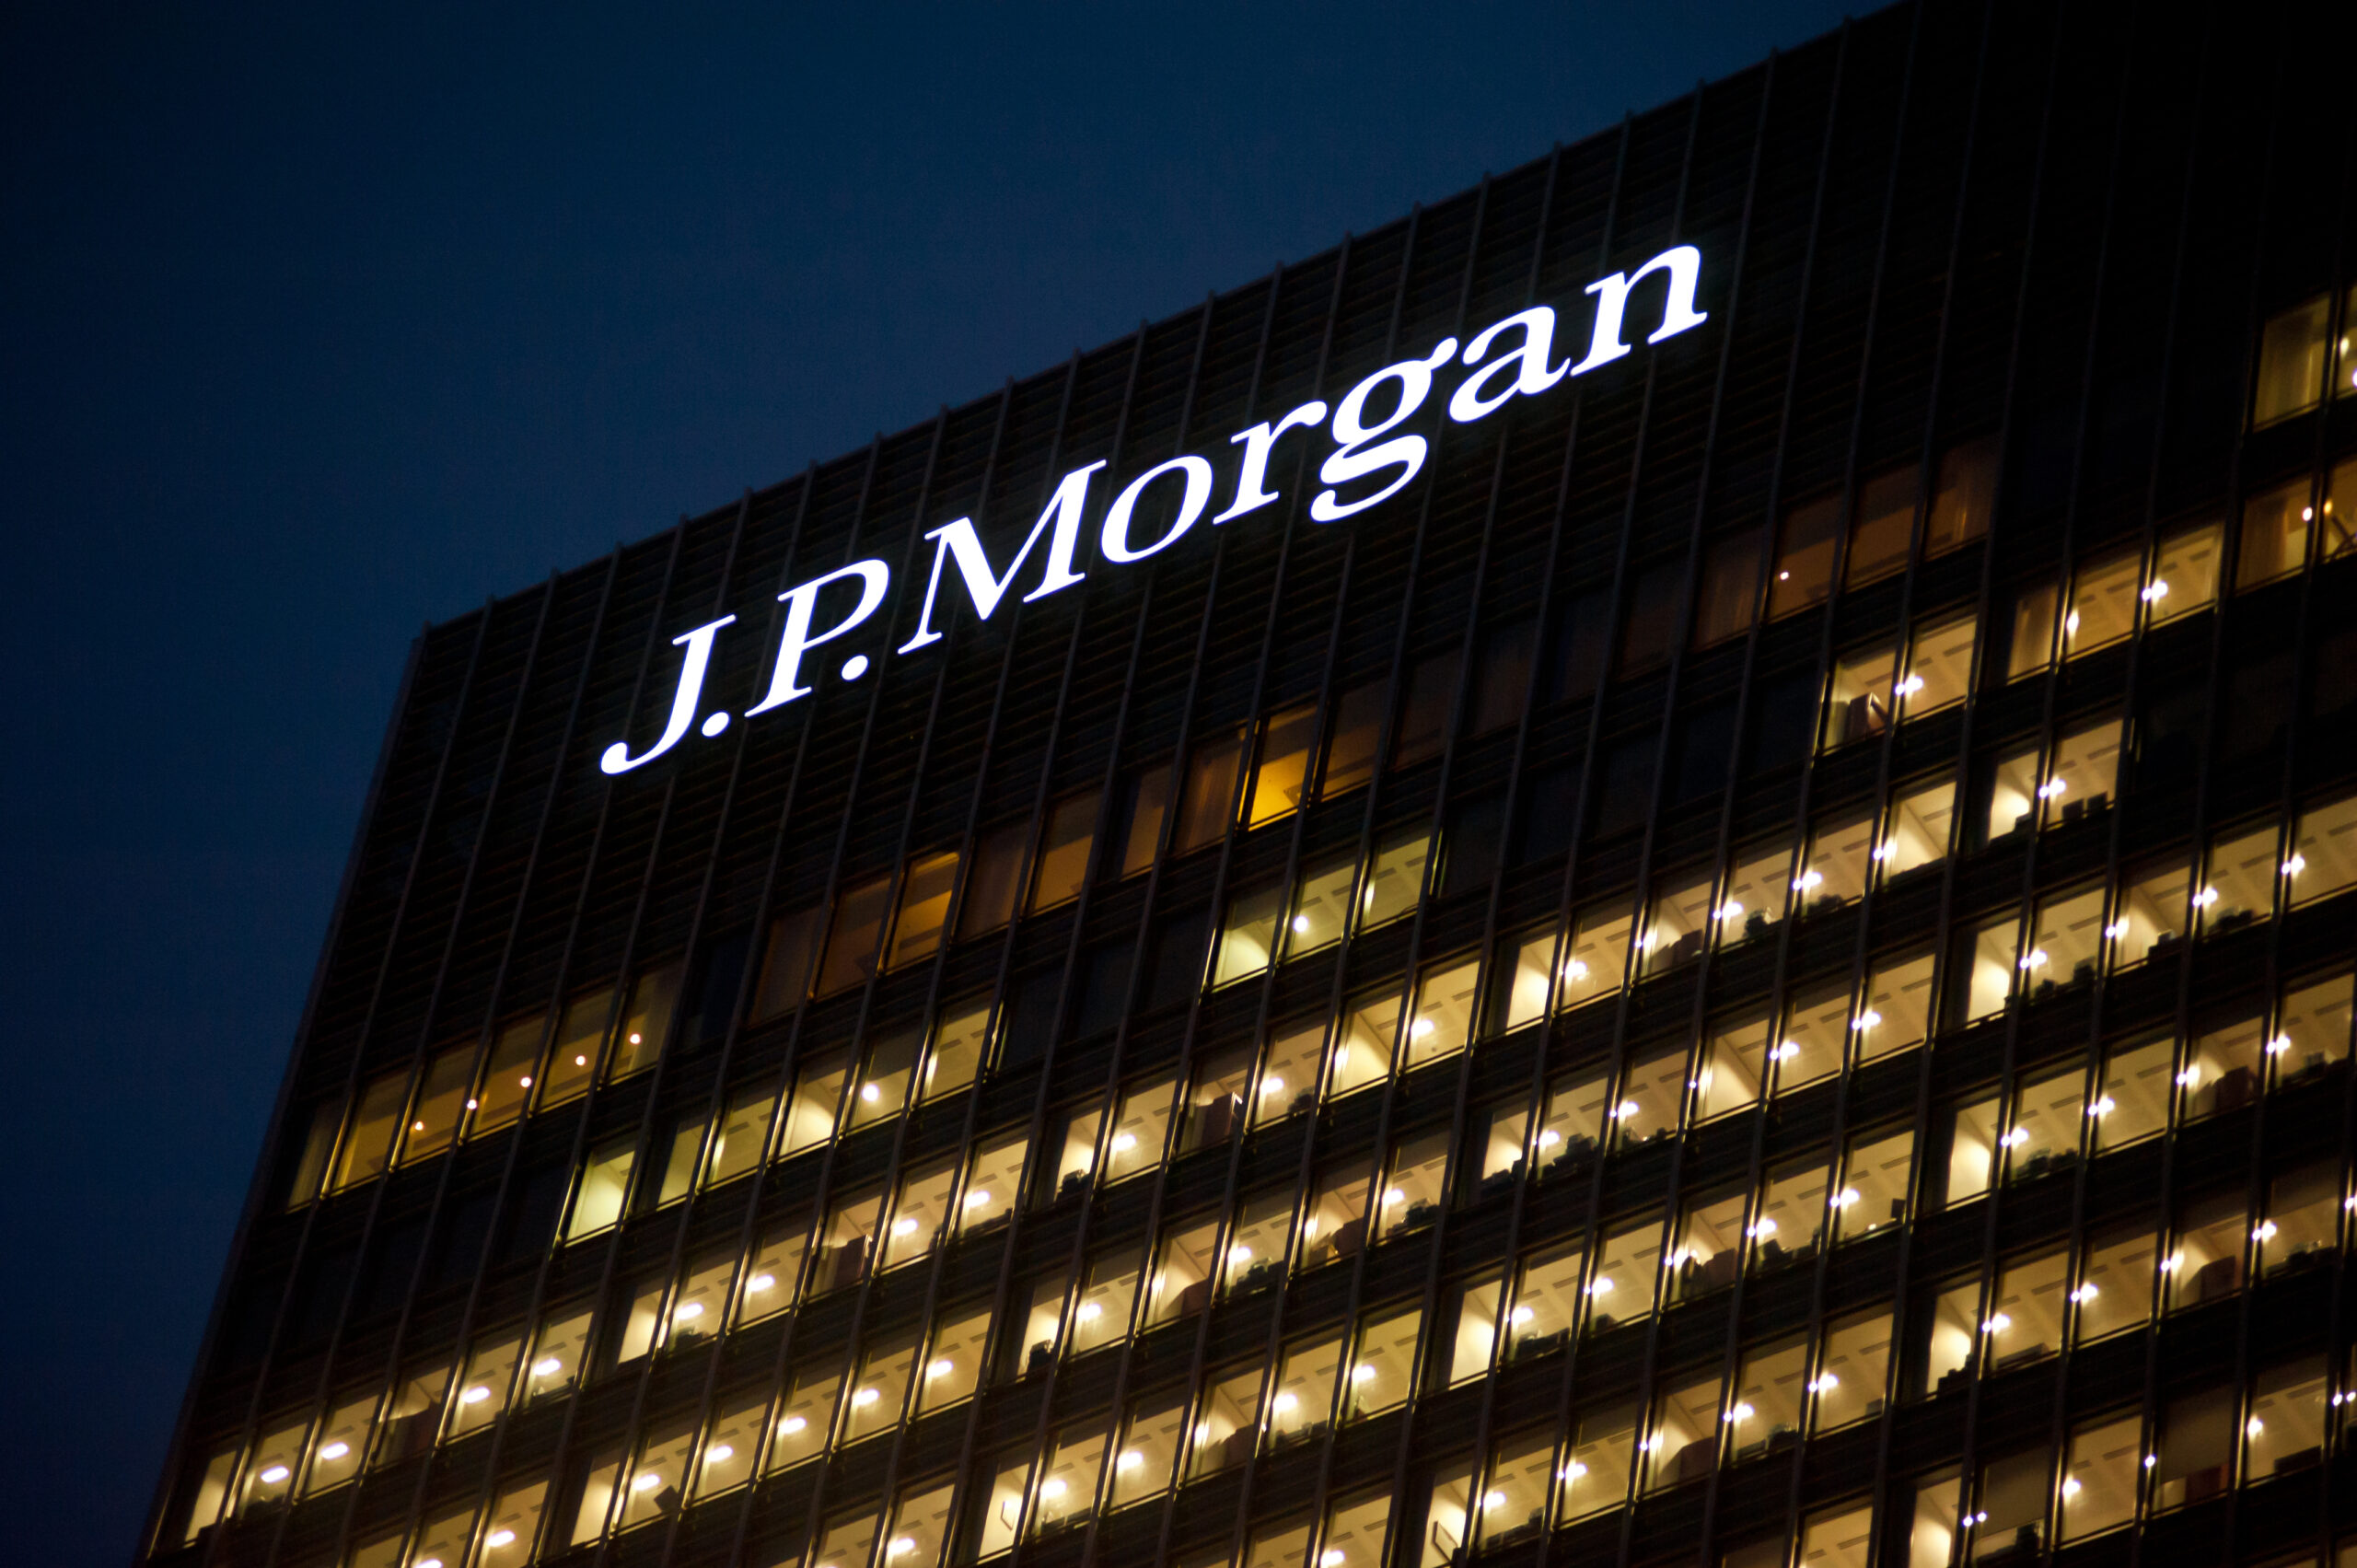 IN arrivo un nuovo chief technology officer per JPMorgan